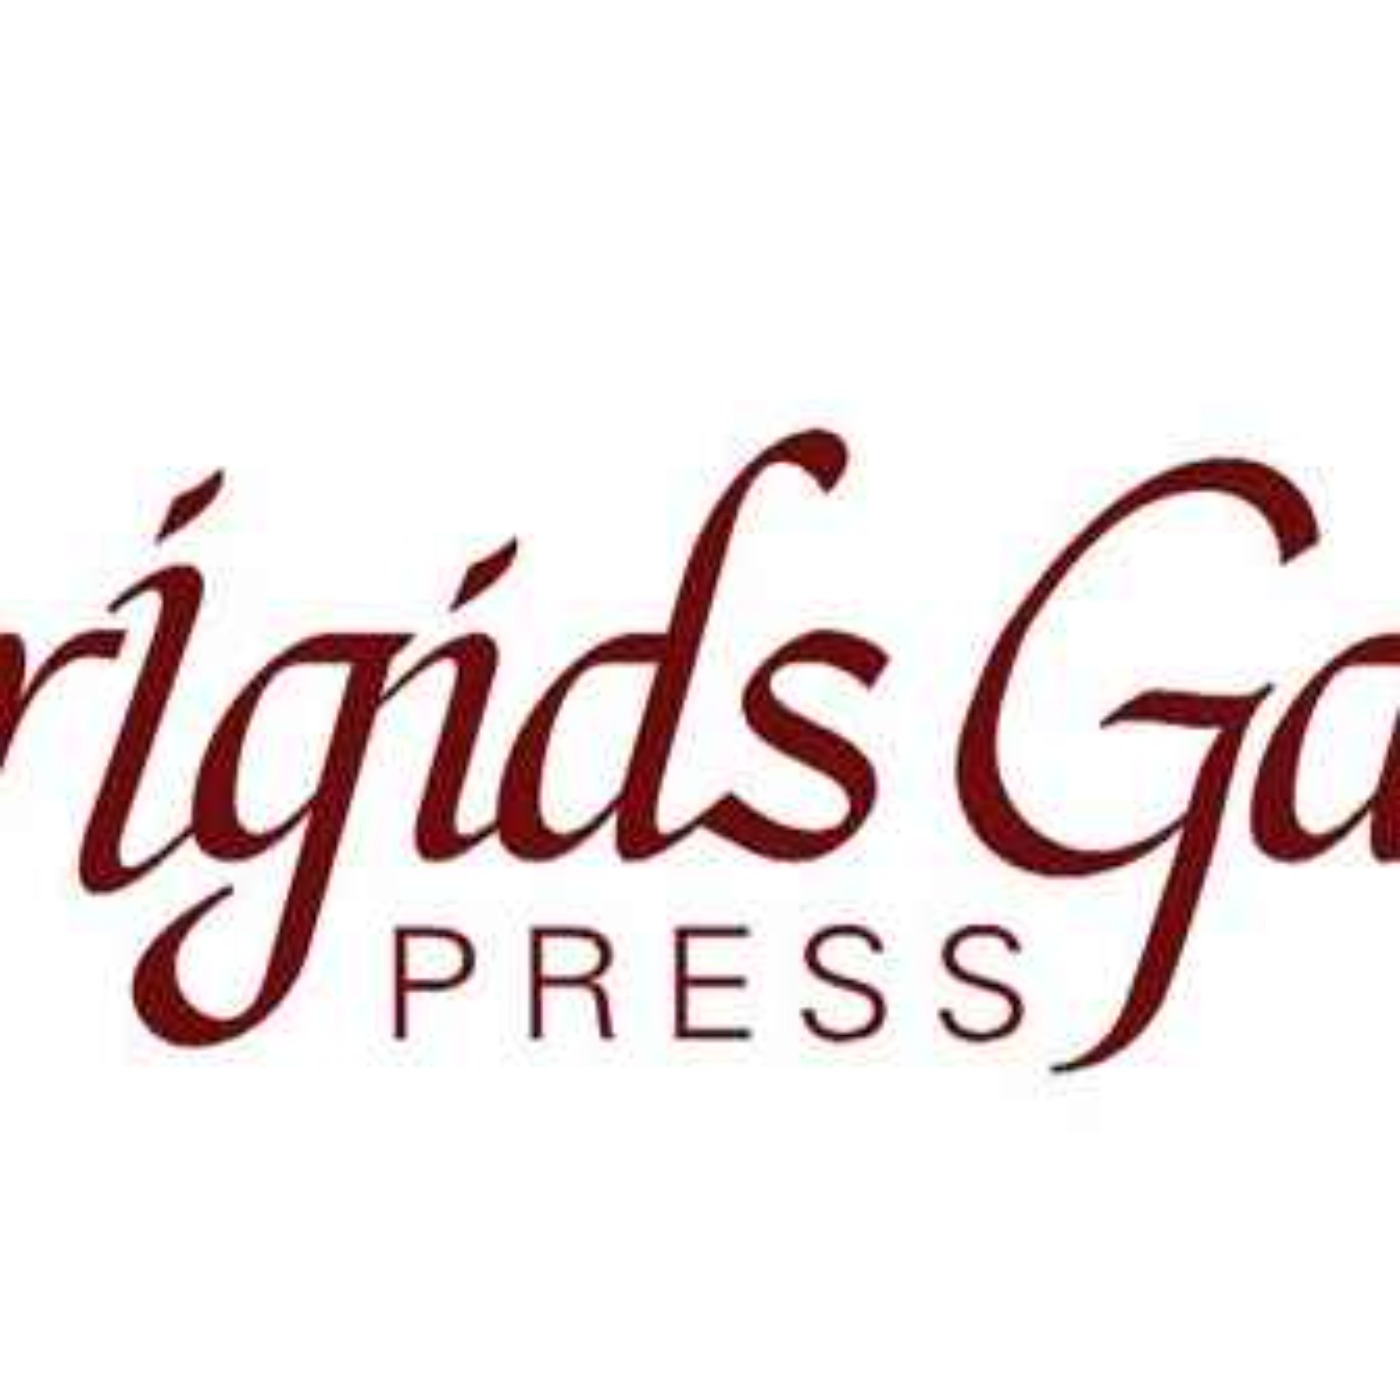 Brigid’s Gate Press - Heather Ventura & S.D. Vassallo